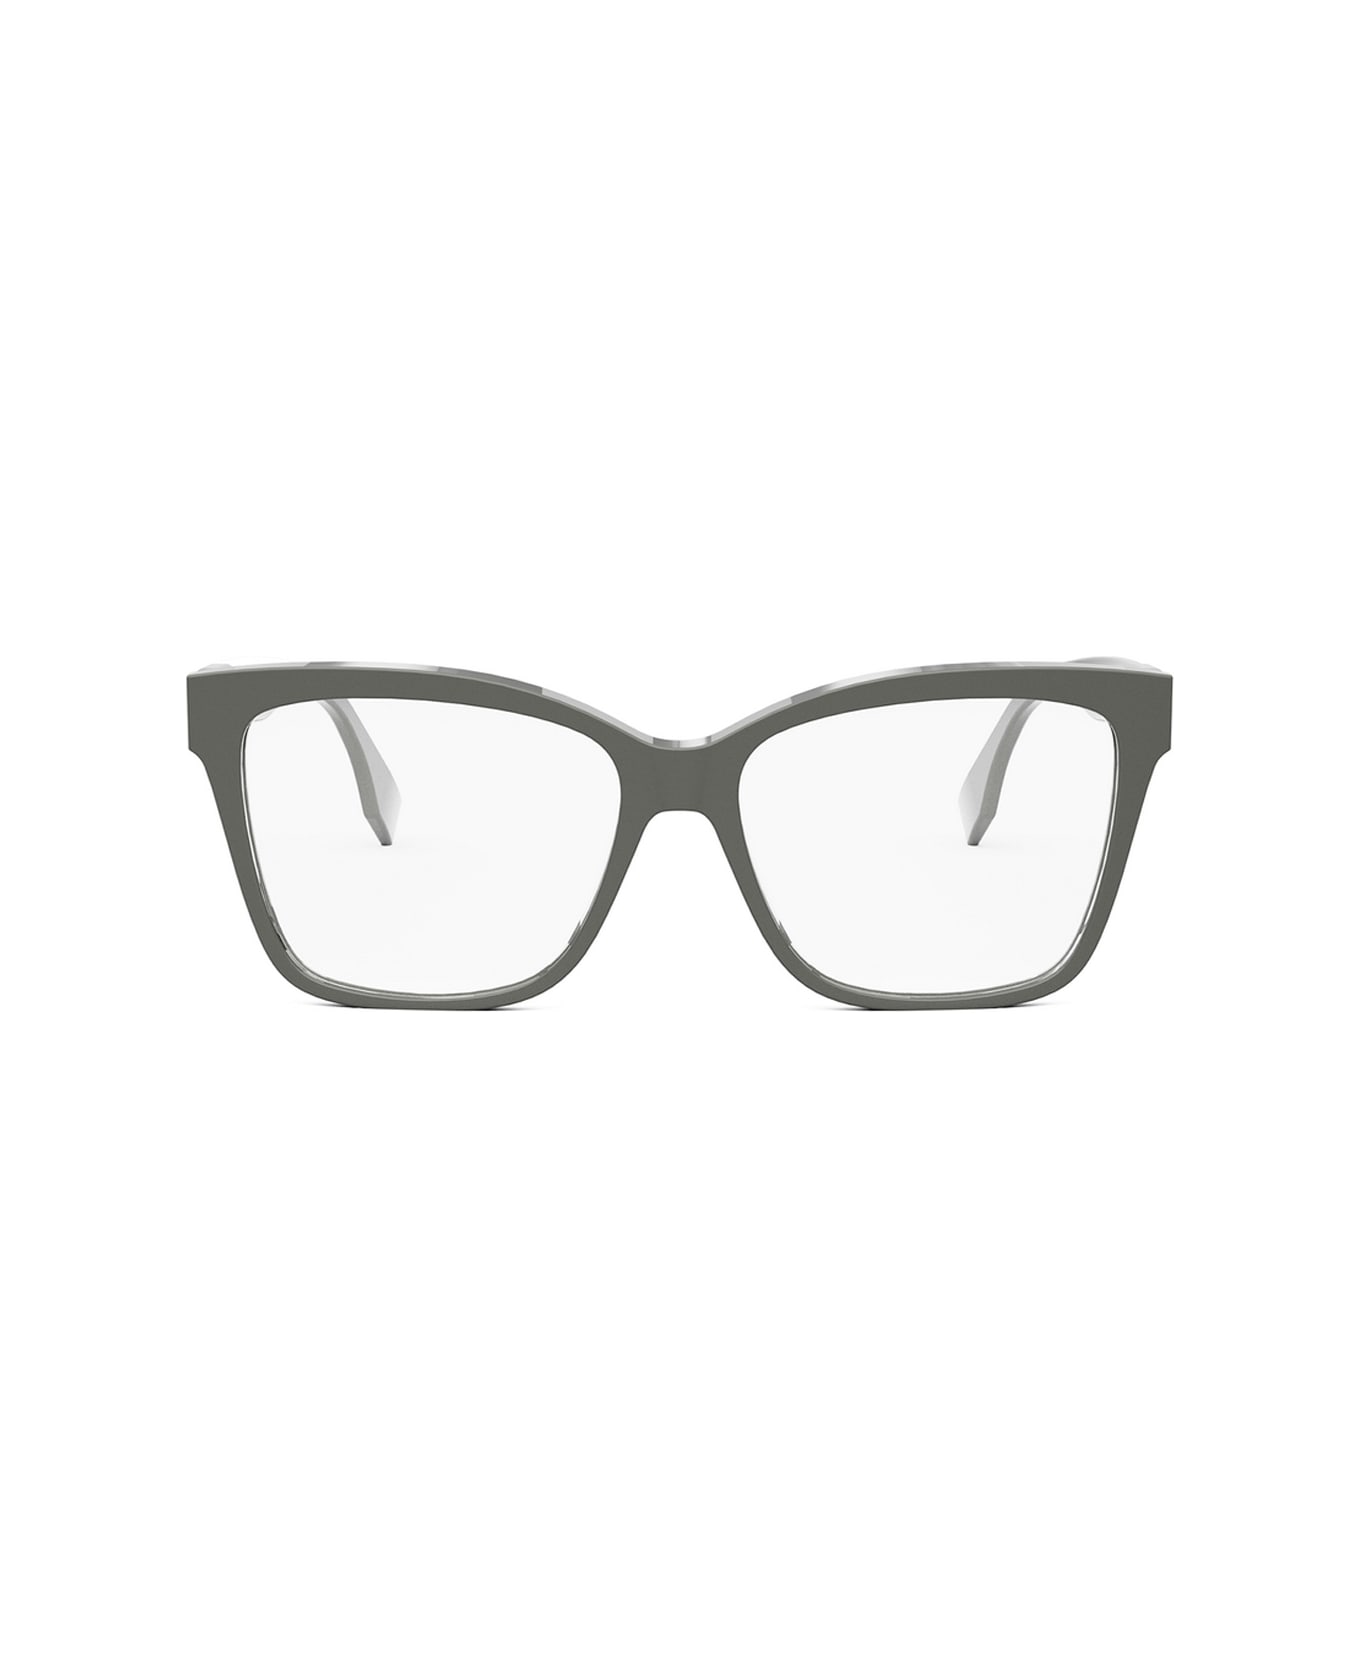 Fendi Eyewear Fe50025i 020 Glasses - Grigio